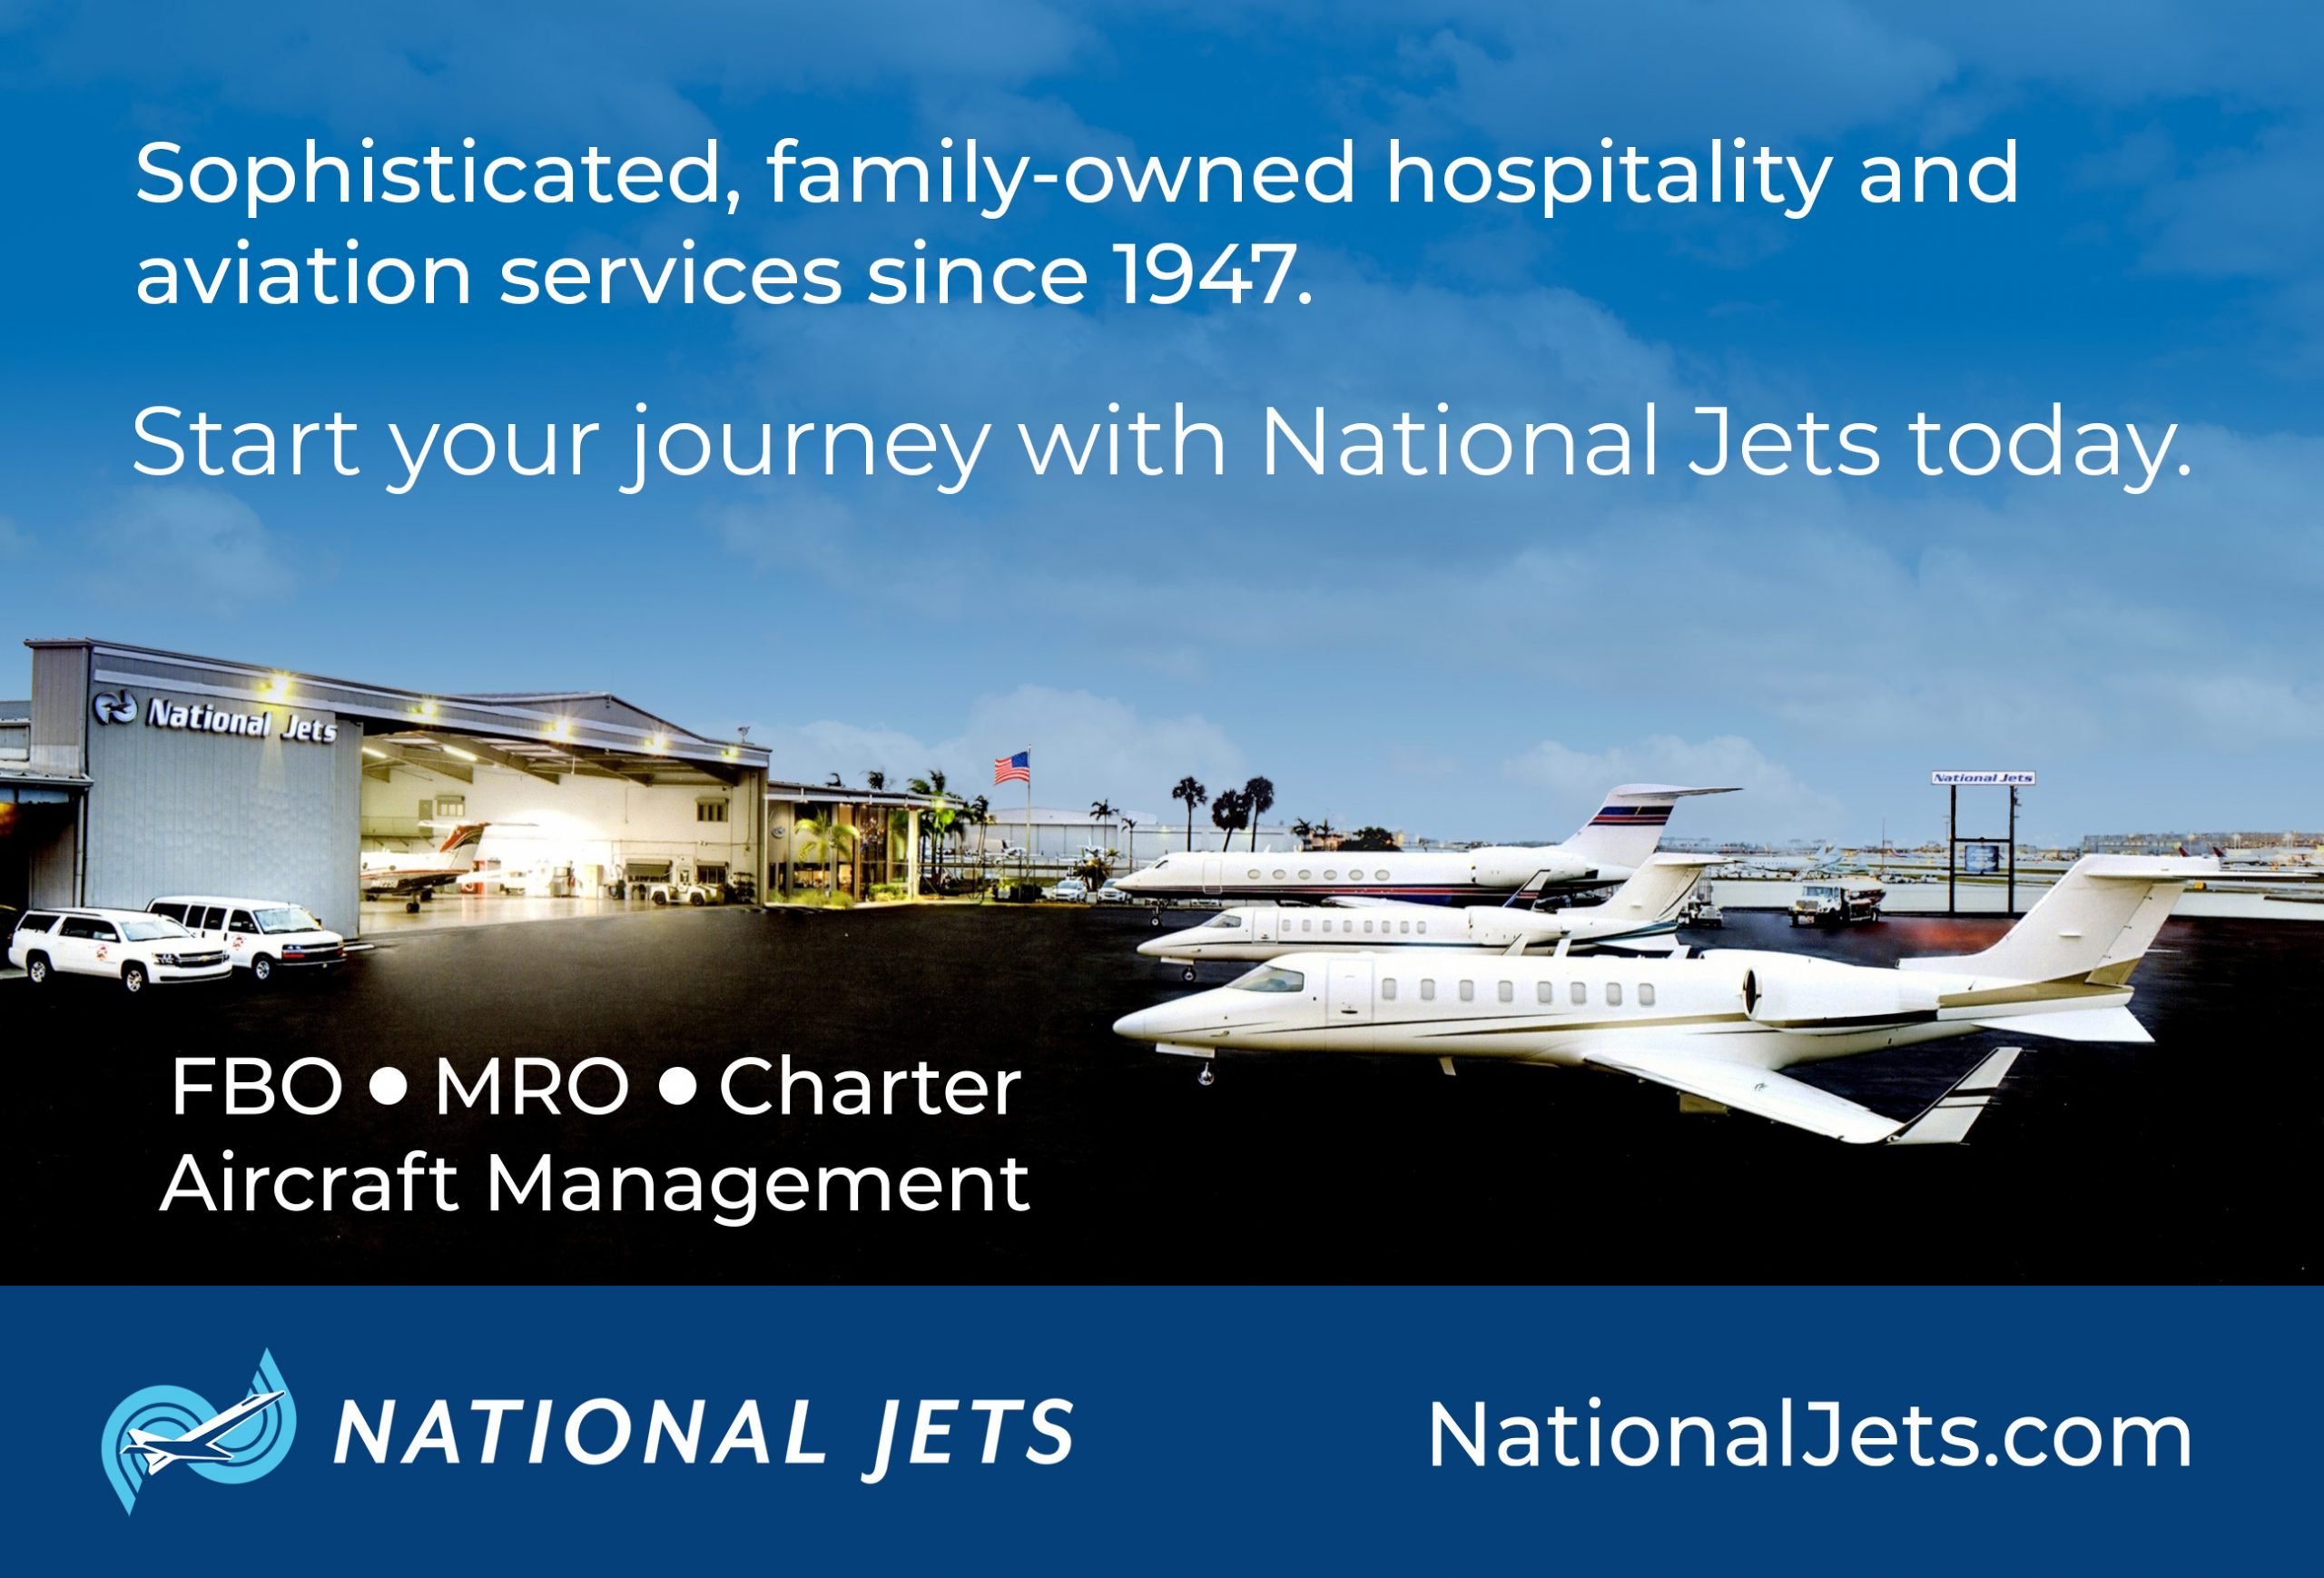 National Jets